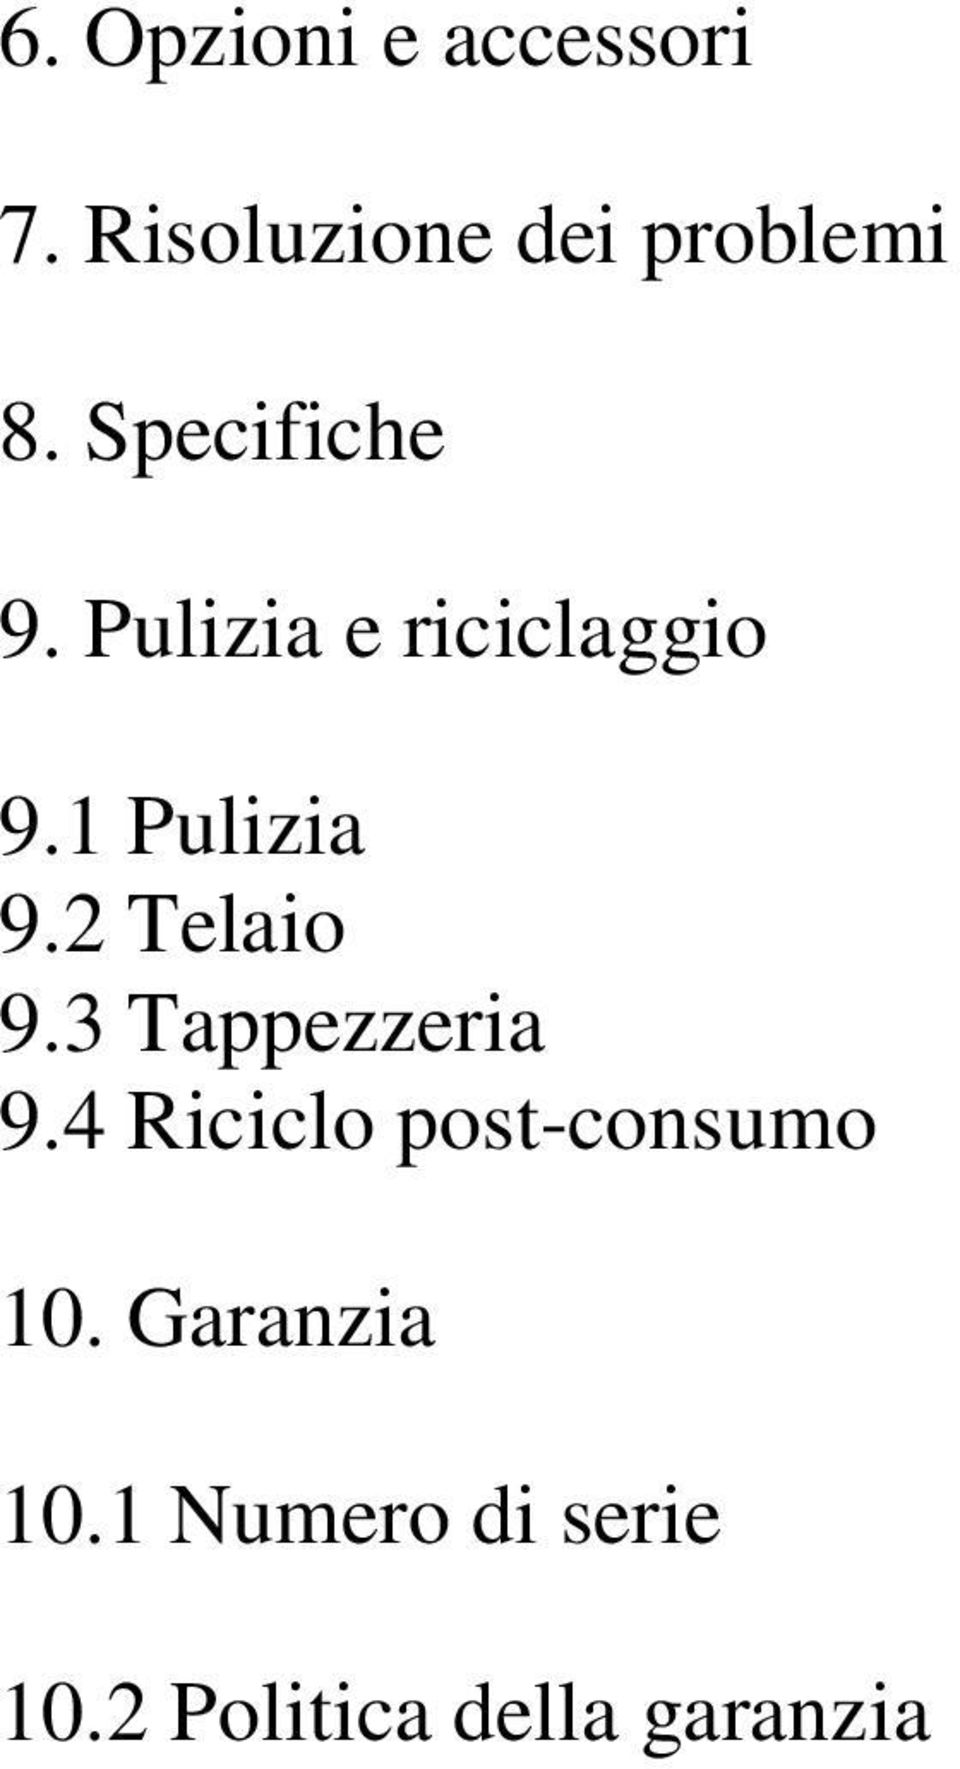 2 Telaio 9.3 Tappezzeria 9.4 Riciclo post-consumo 10.